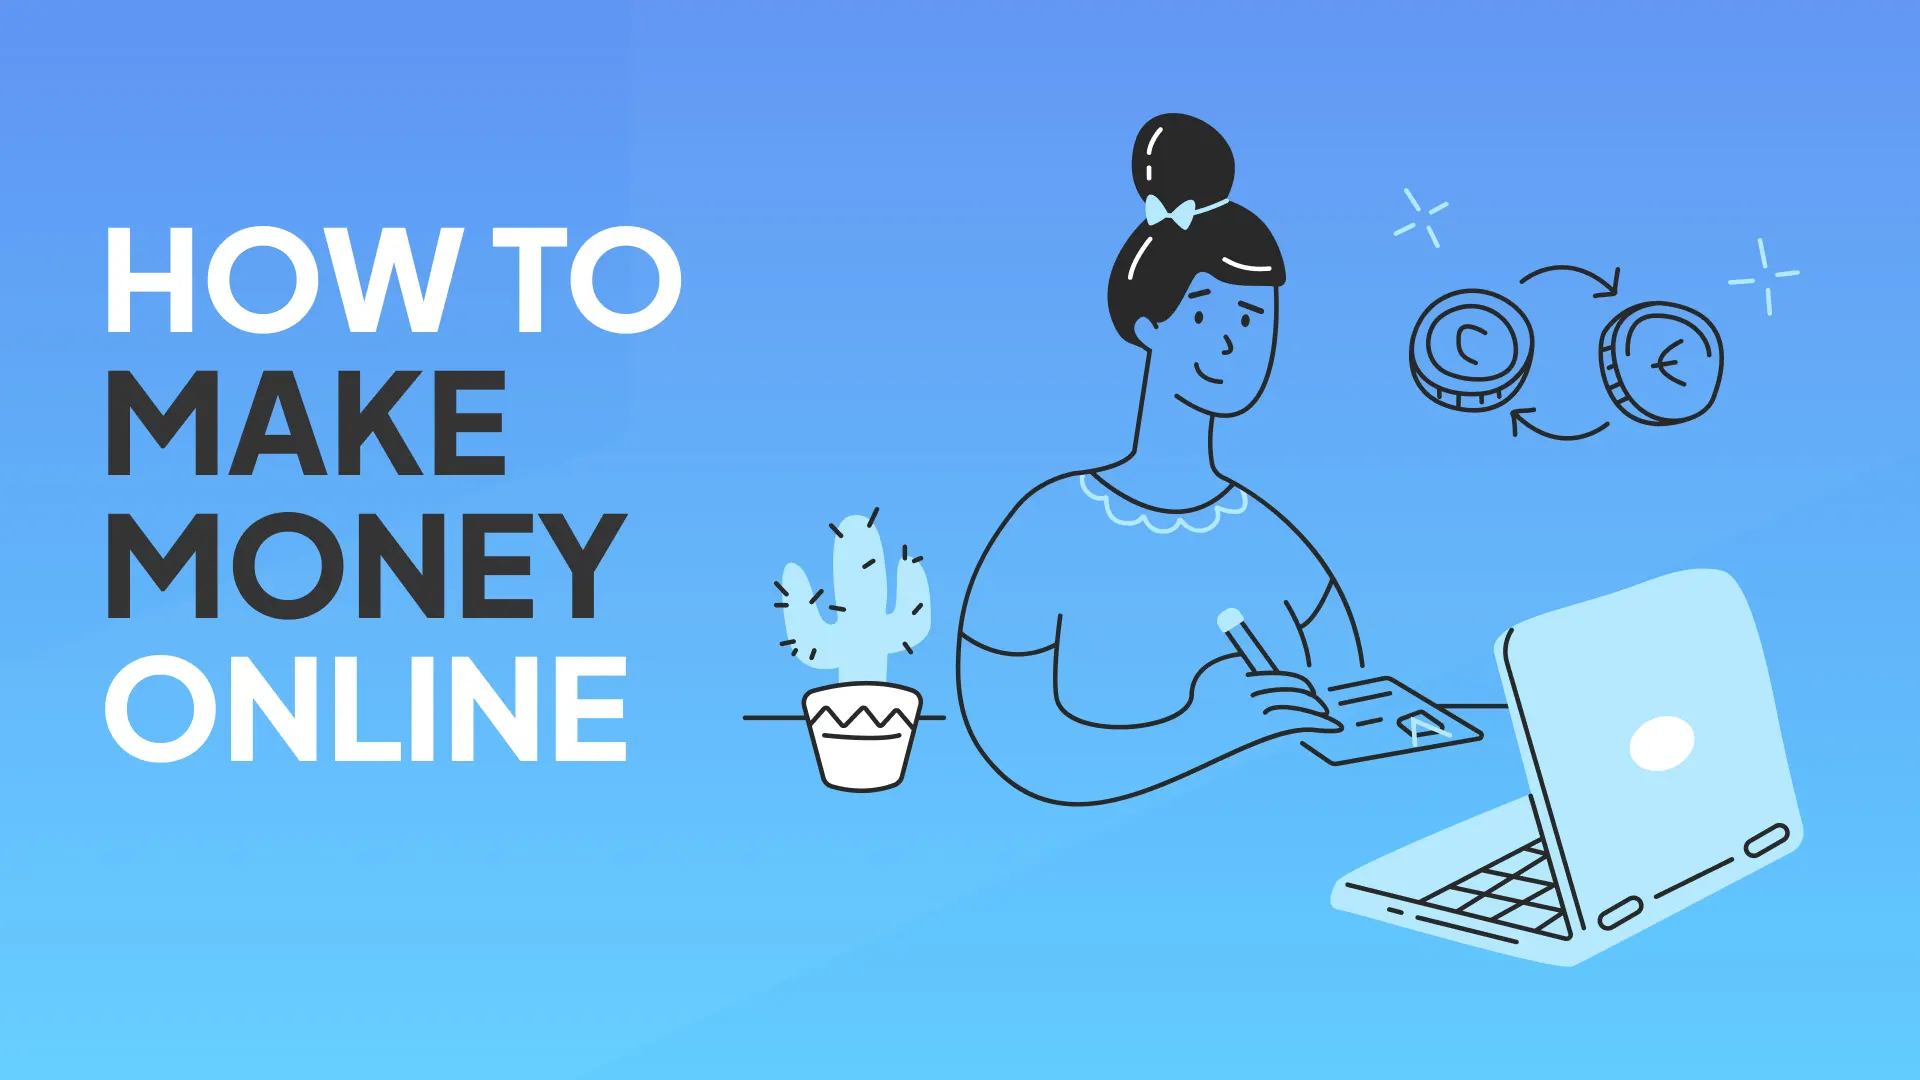 Manking Money : New Ways of Making Money Online